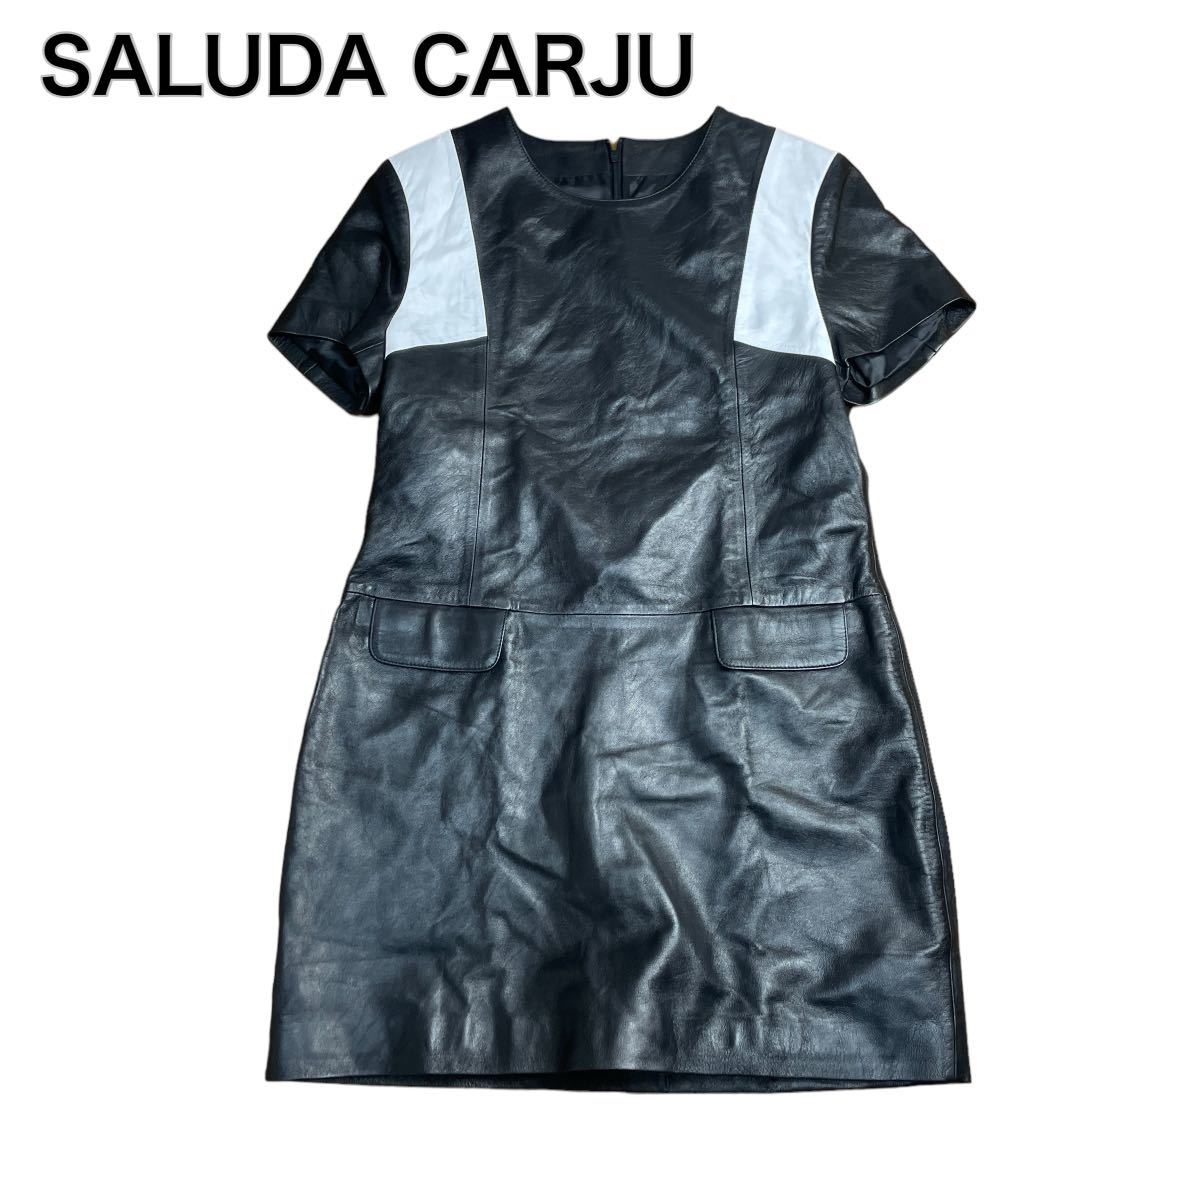 SALUDA CARJU レザーワンピース 本革 ブラック黒 XL 大きいサイズ _画像1